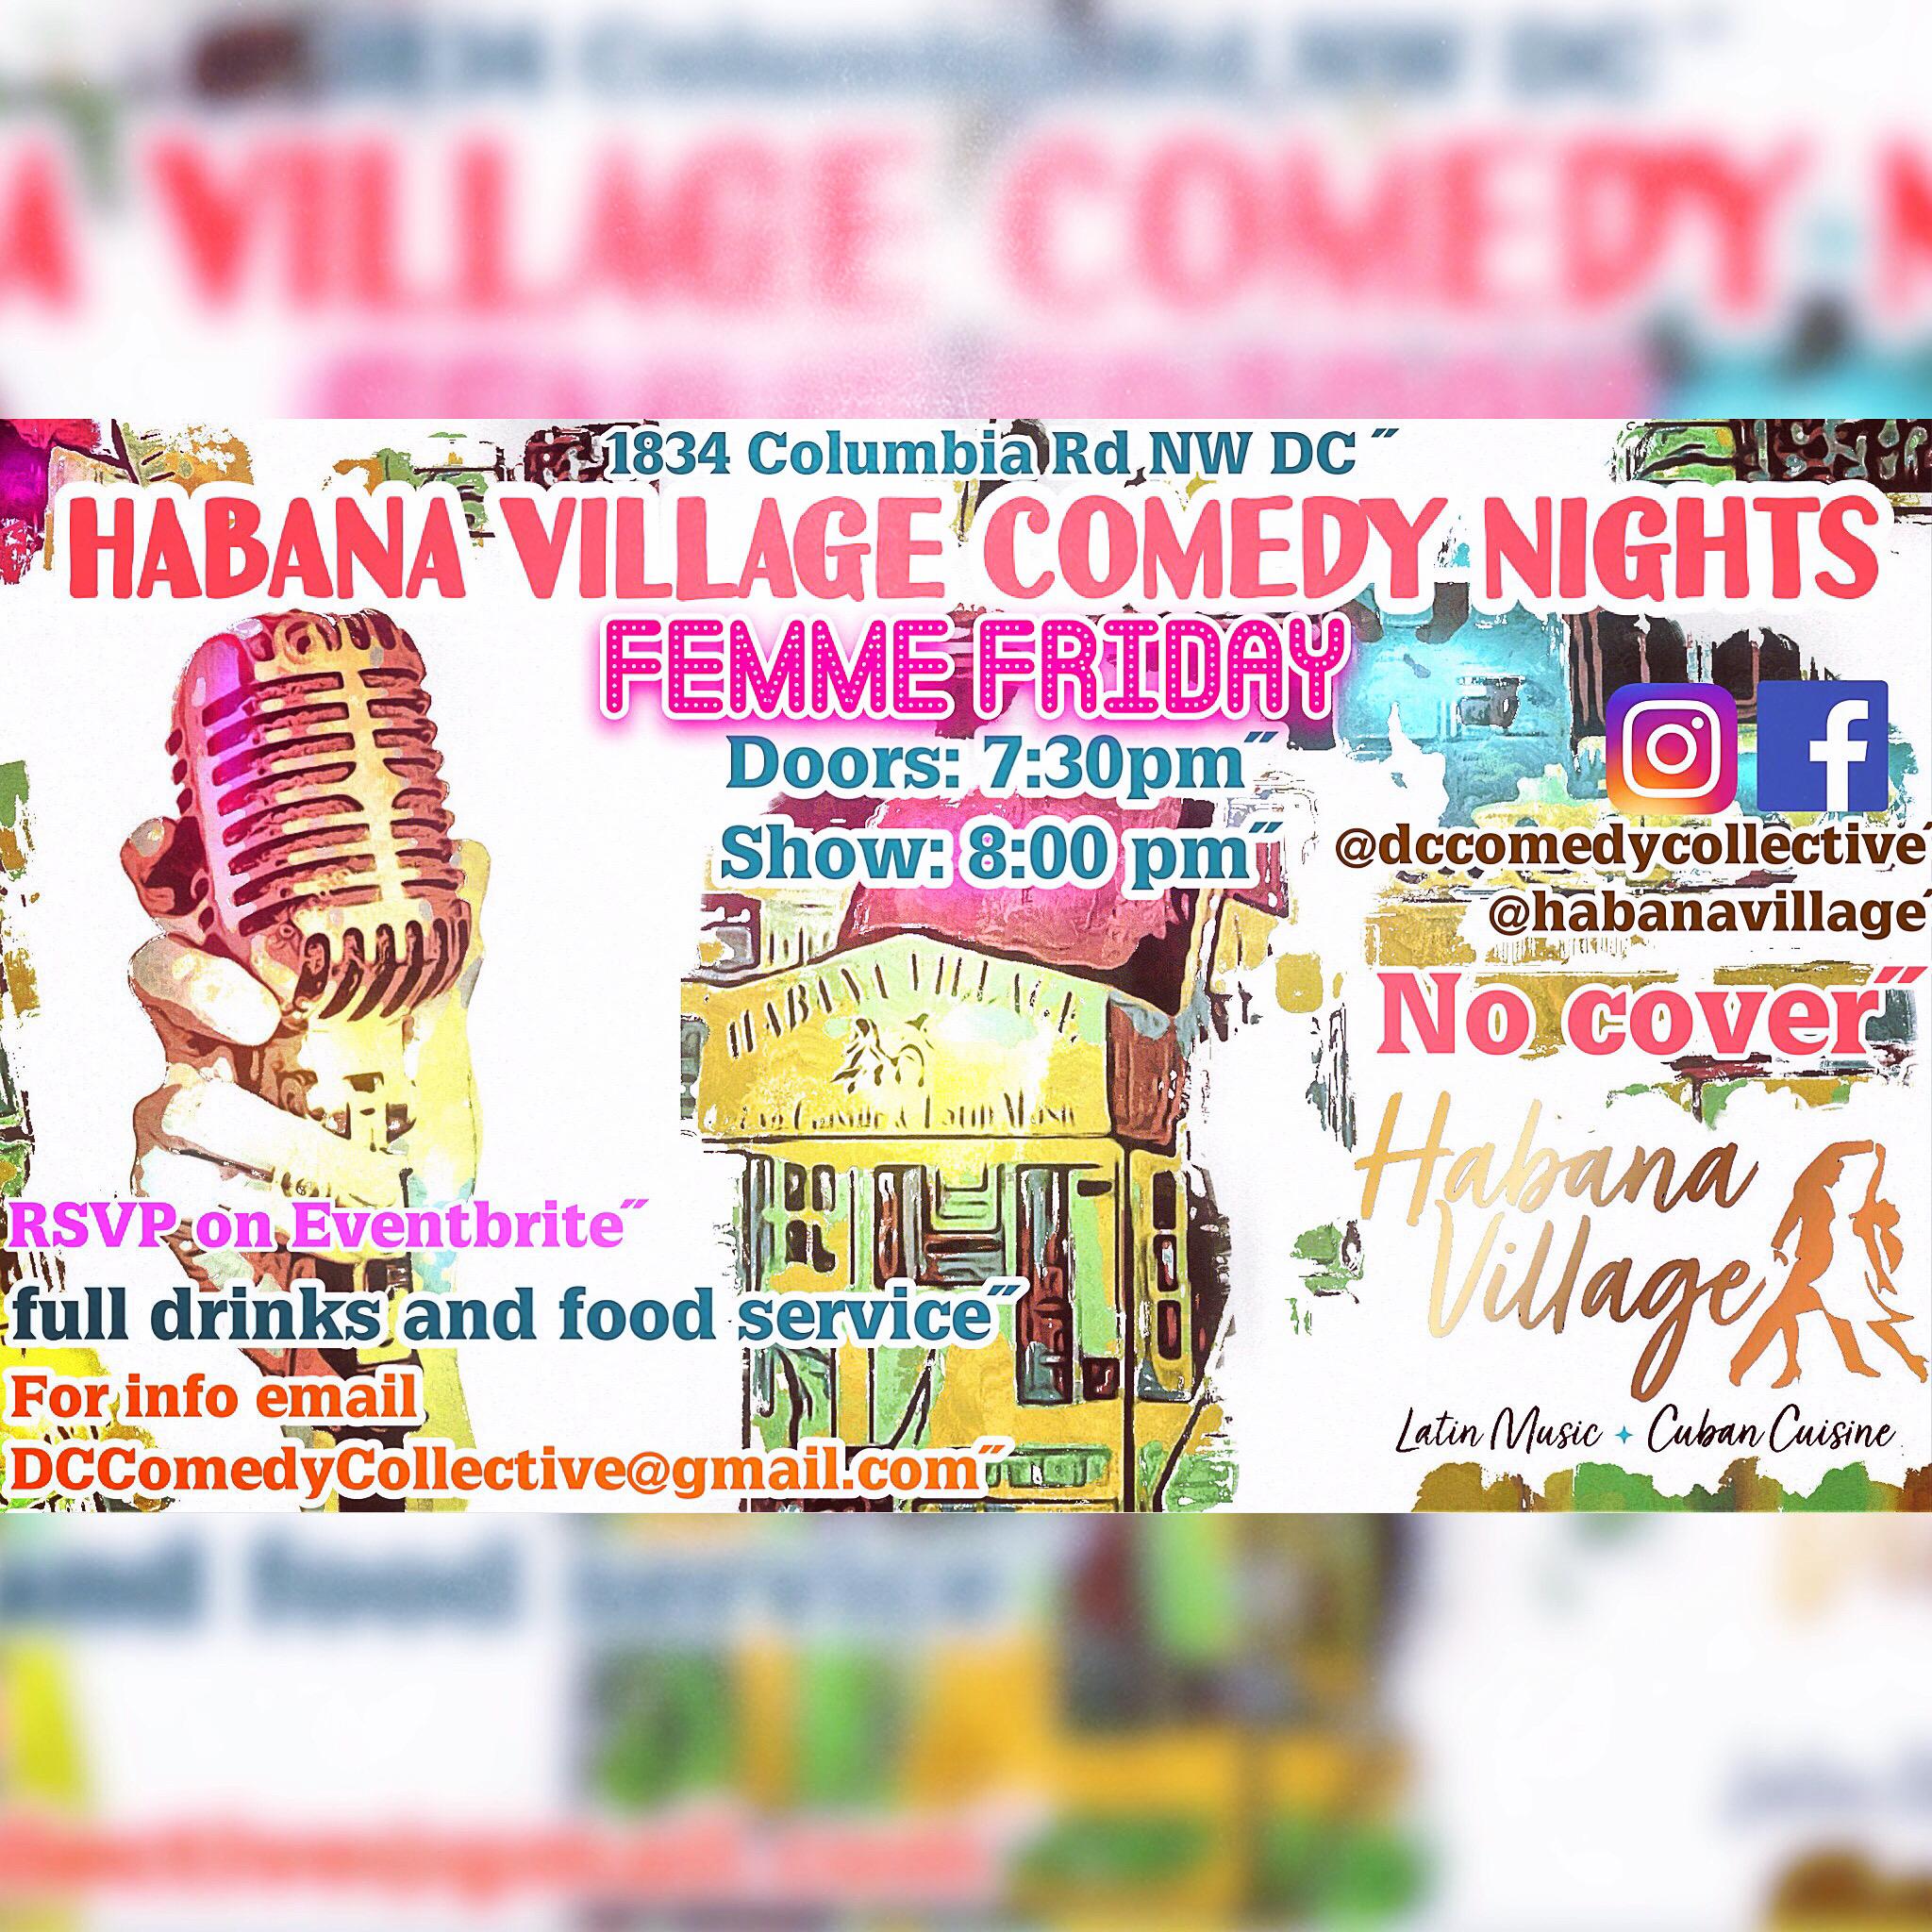 Habana Village Comedy Nights - Femme Friday